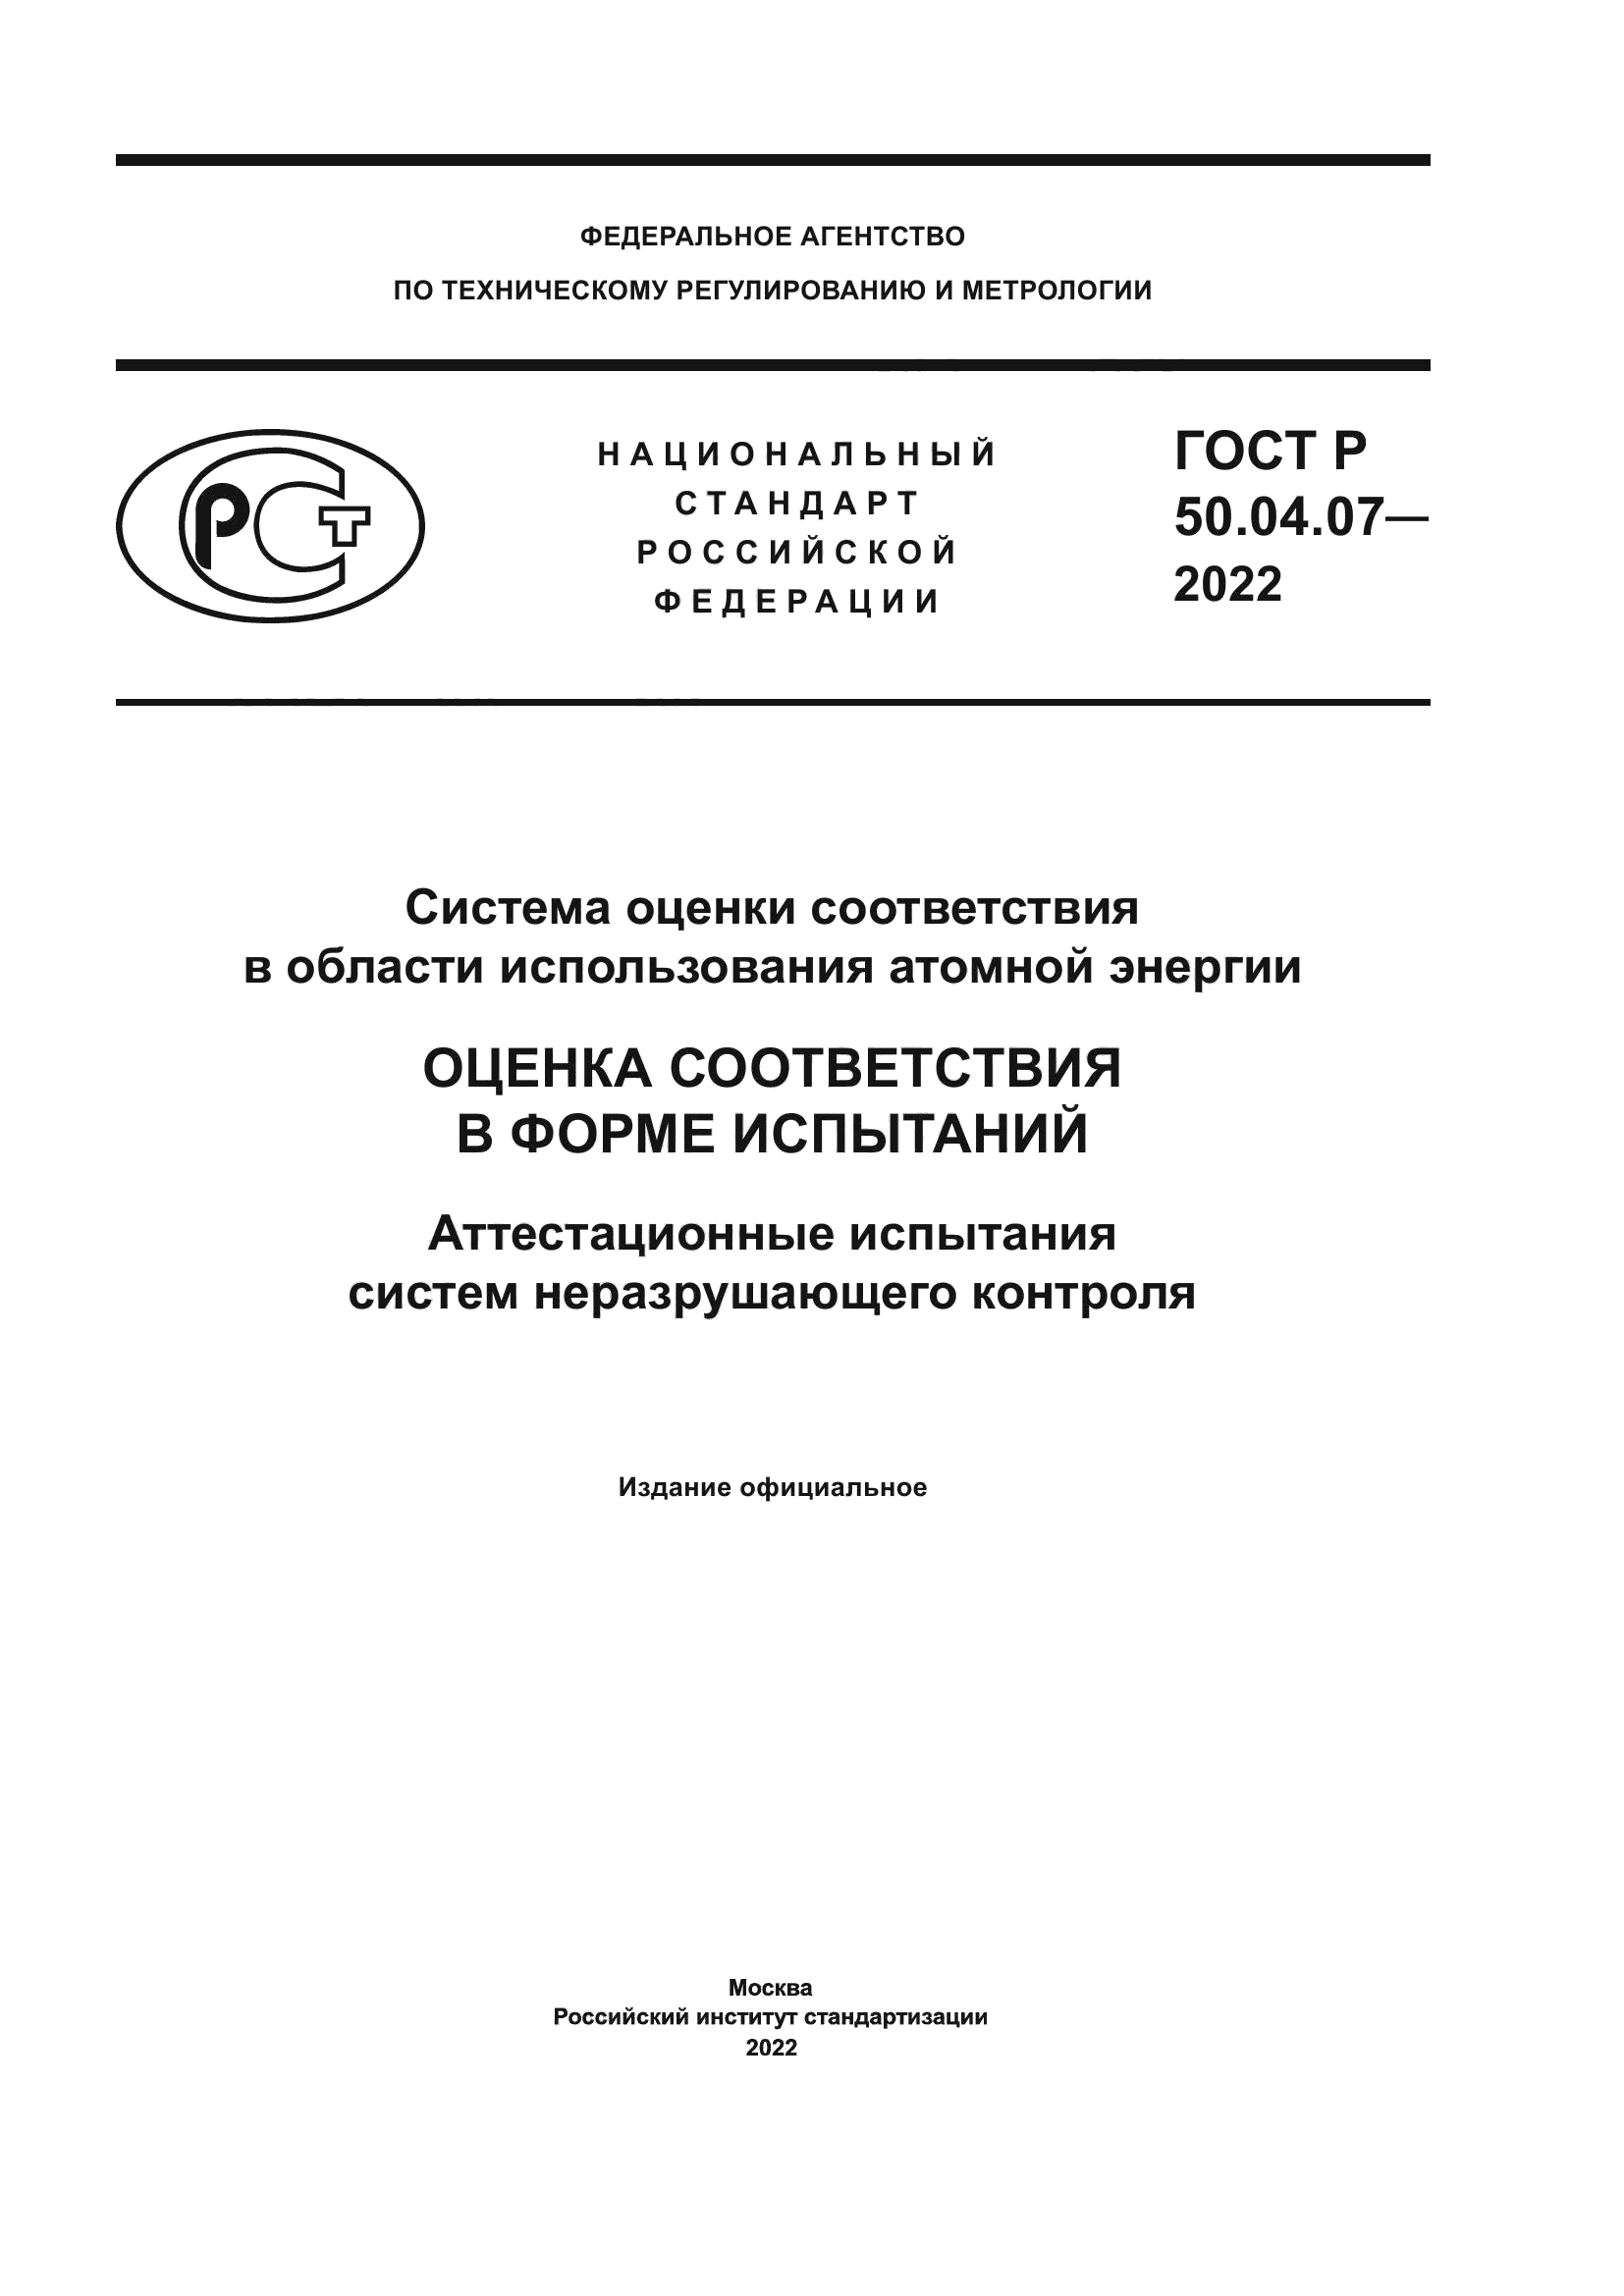 ГОСТ Р 50.04.07-2022